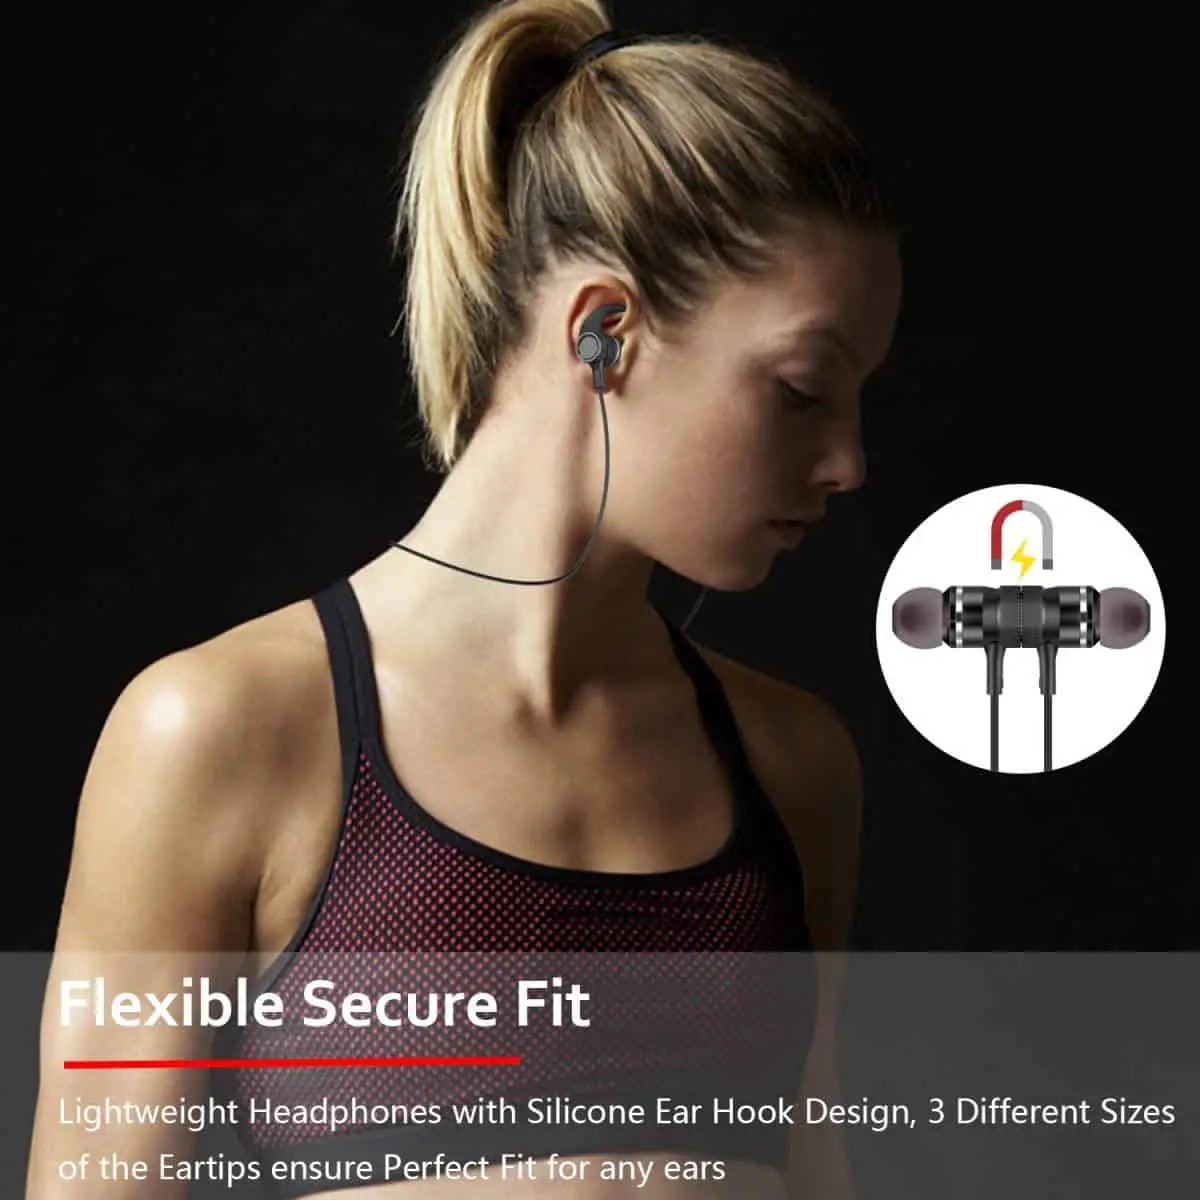 Jawbuds Sports Headphones | Get These Tech Gadgets Via Amazon Prime